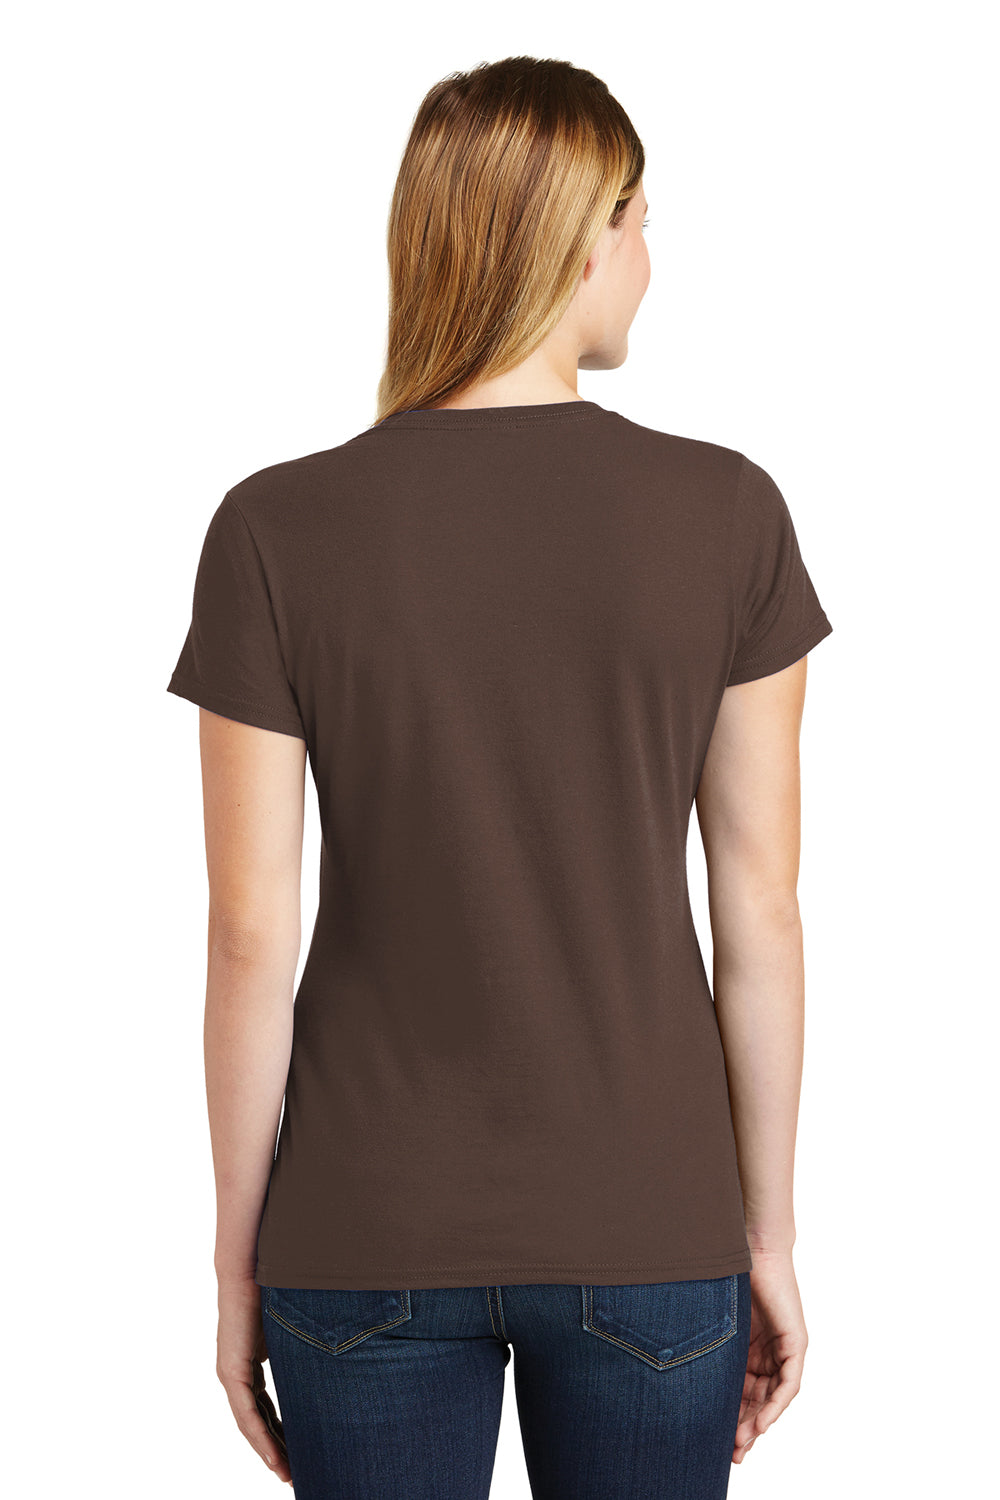 Port & Company LPC450 Womens Fan Favorite Short Sleeve Crewneck T-Shirt Dark Chocolate Brown Back